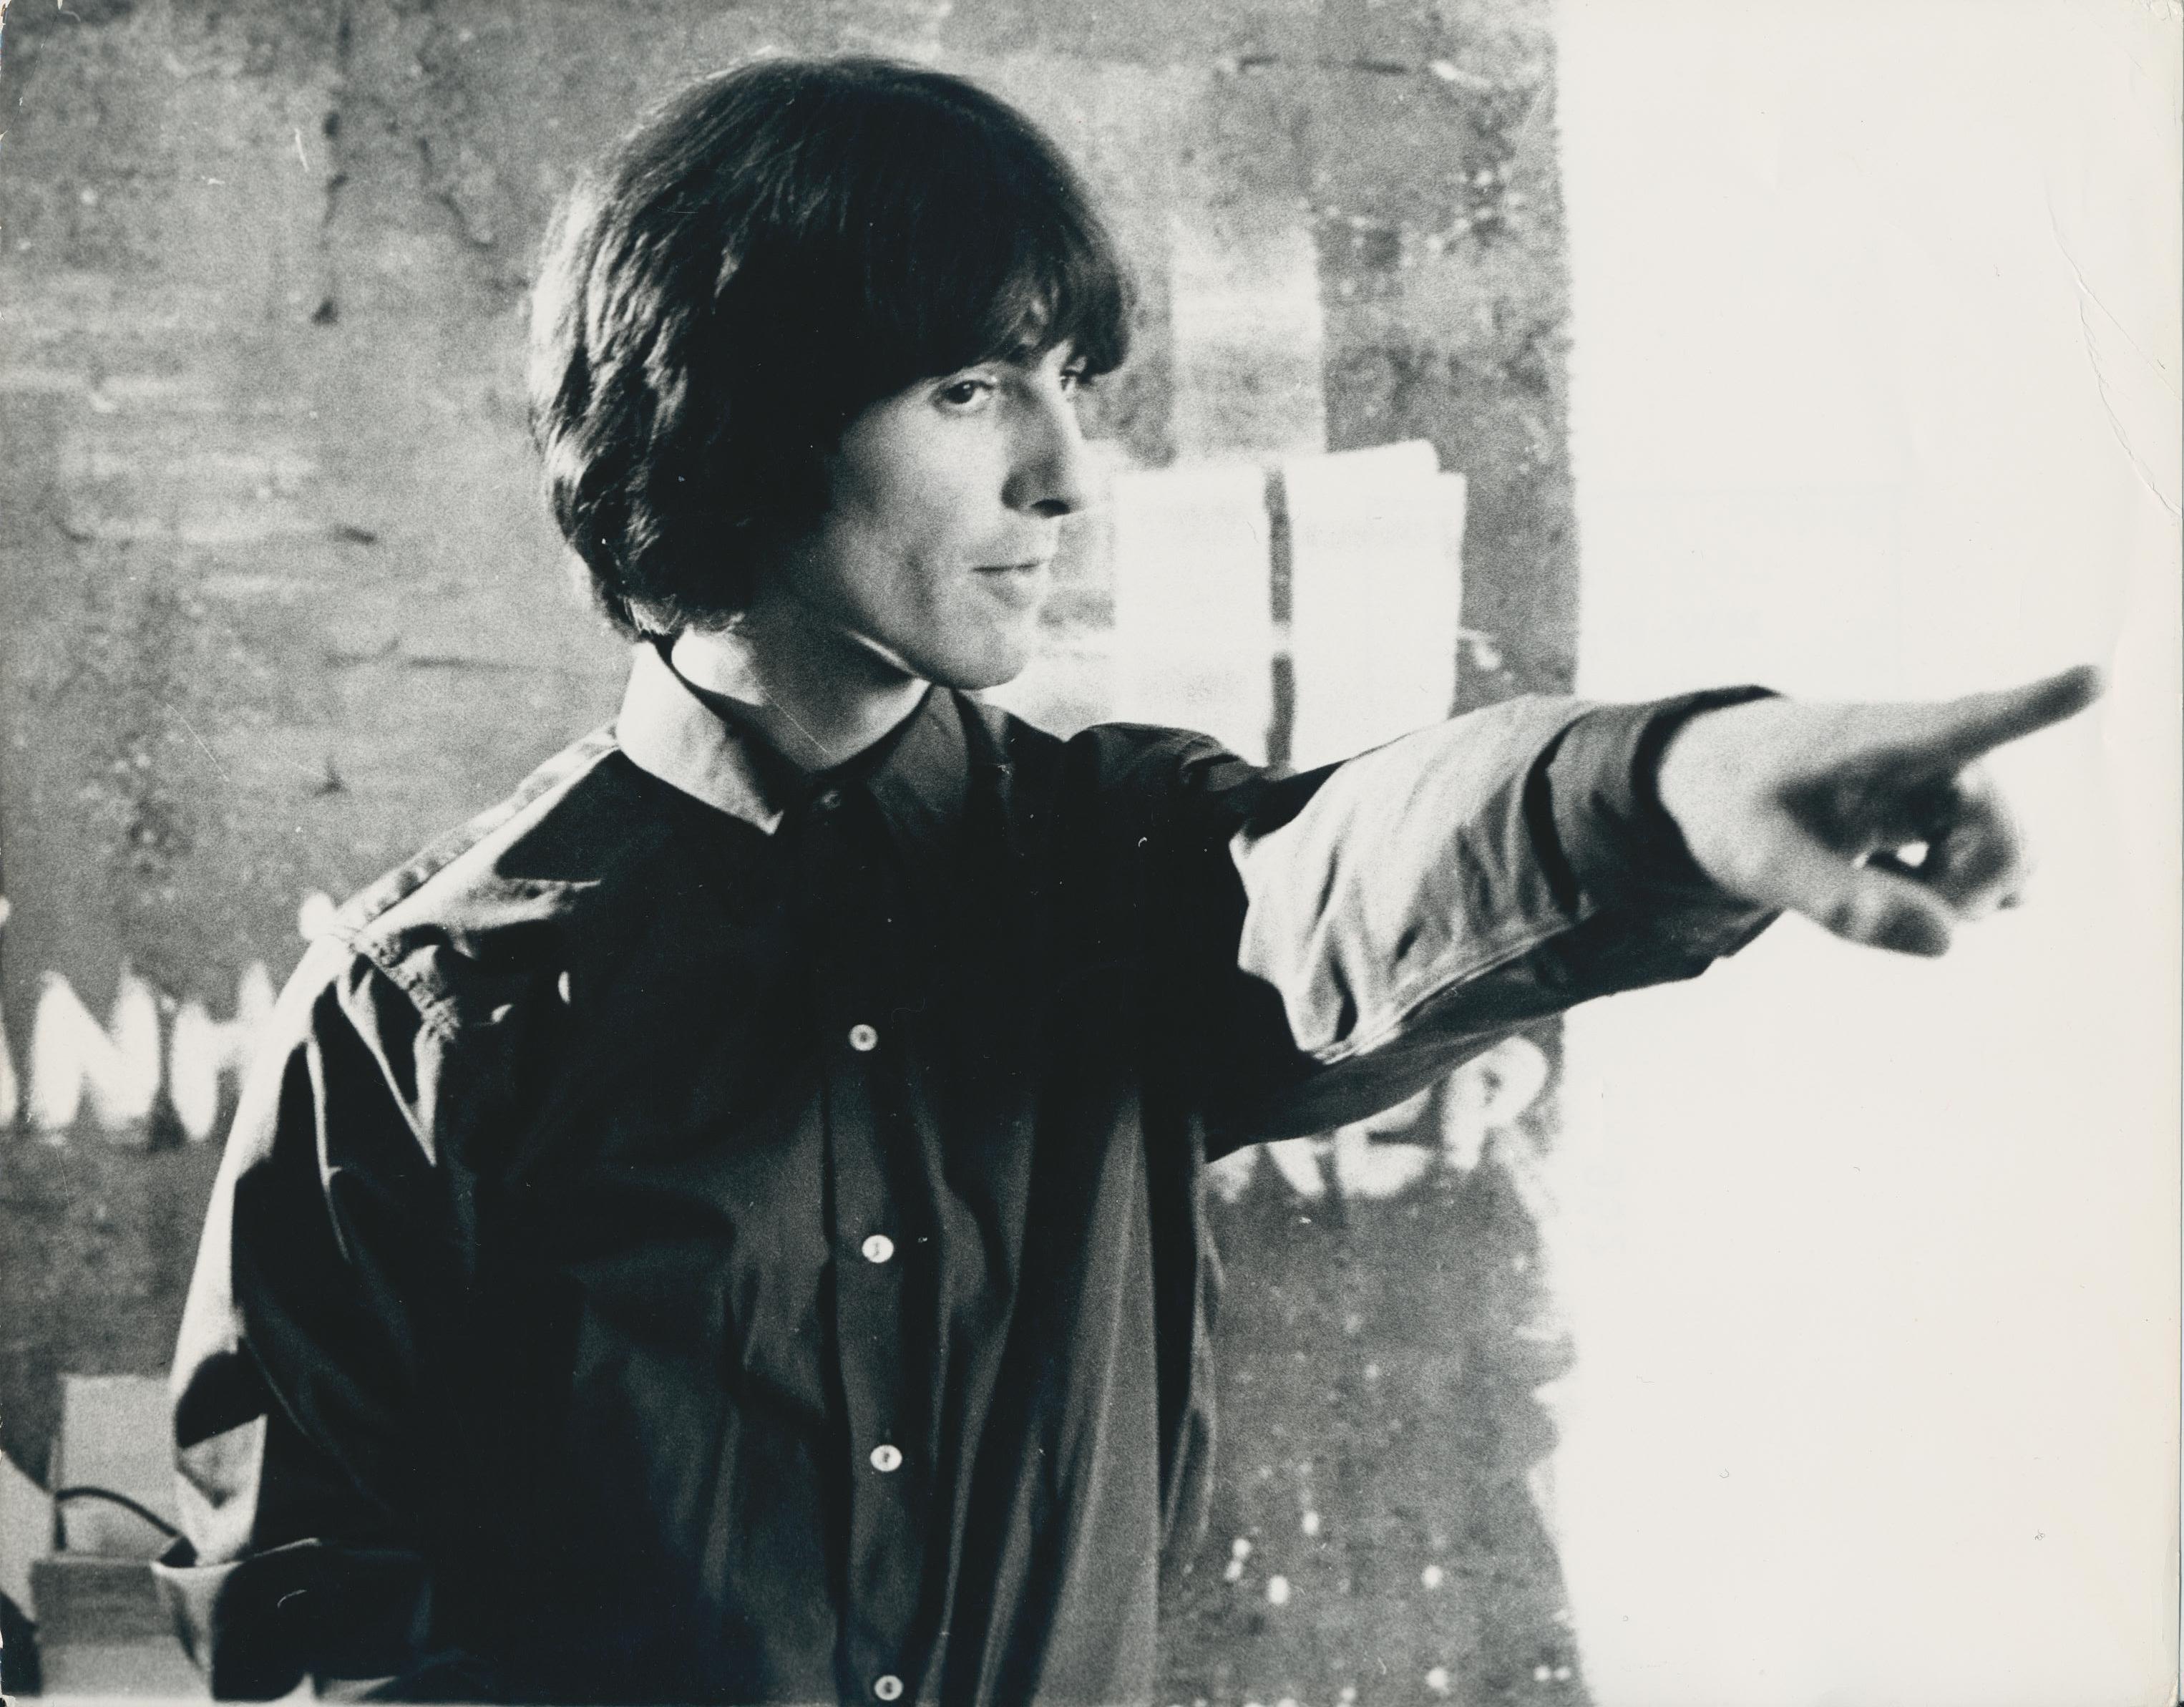 Martin Weaver Portrait Photograph - George Harrison, Black and White Photography, ca. 1970s, 20, 4 x 25, 7 cm